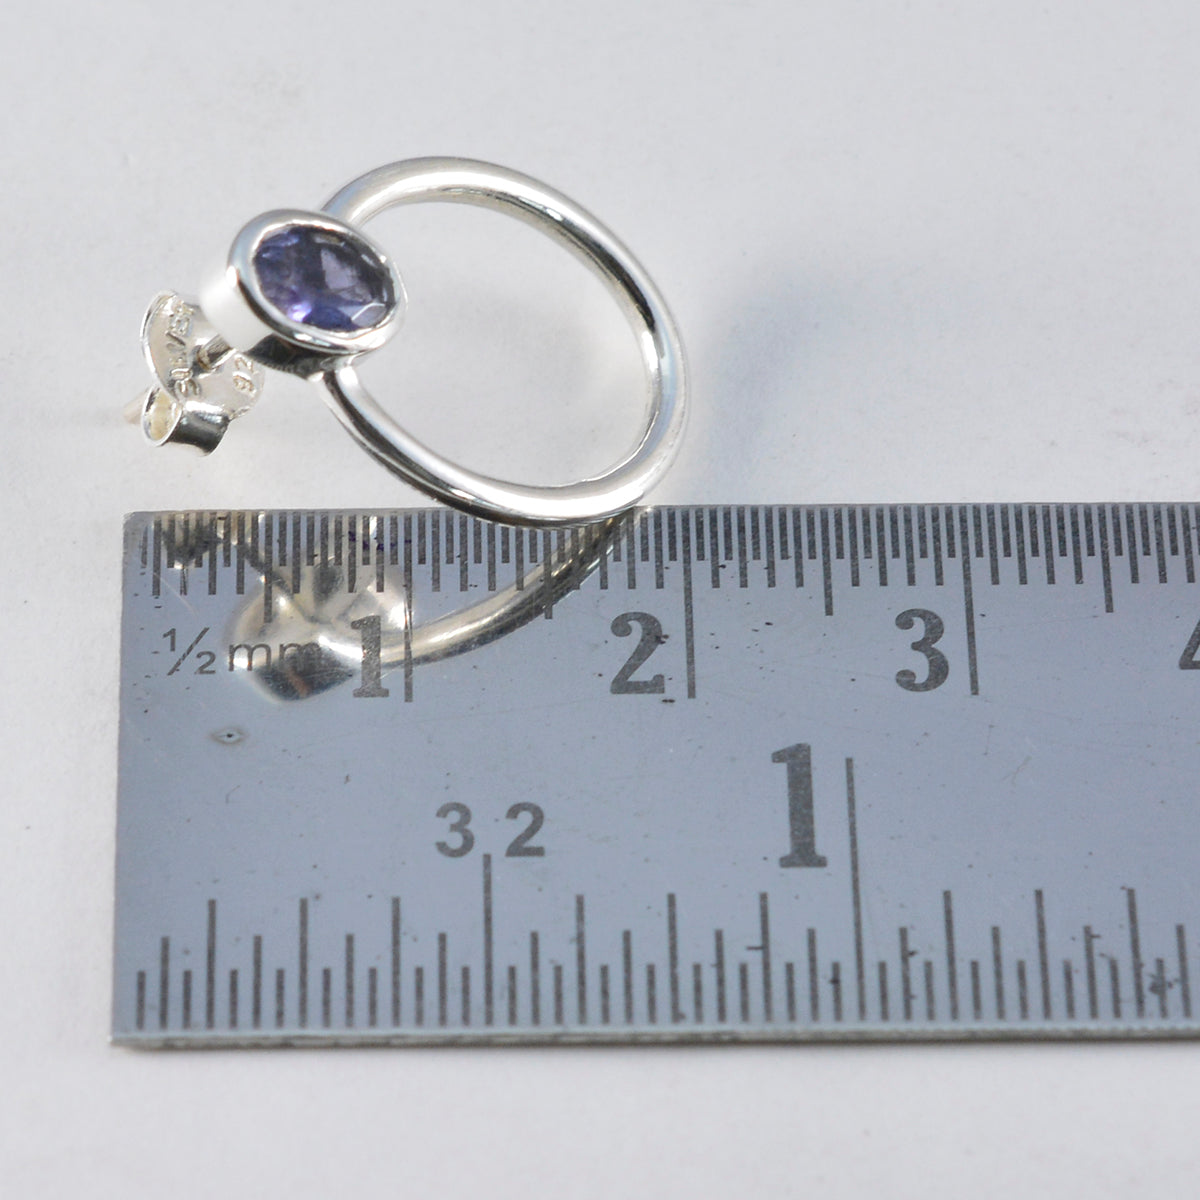 Riyo Beauteous 925 Sterling Silber Ohrring für Demoiselle Iolith Ohrring Lünette Fassung Blauer Ohrring Ohrstecker